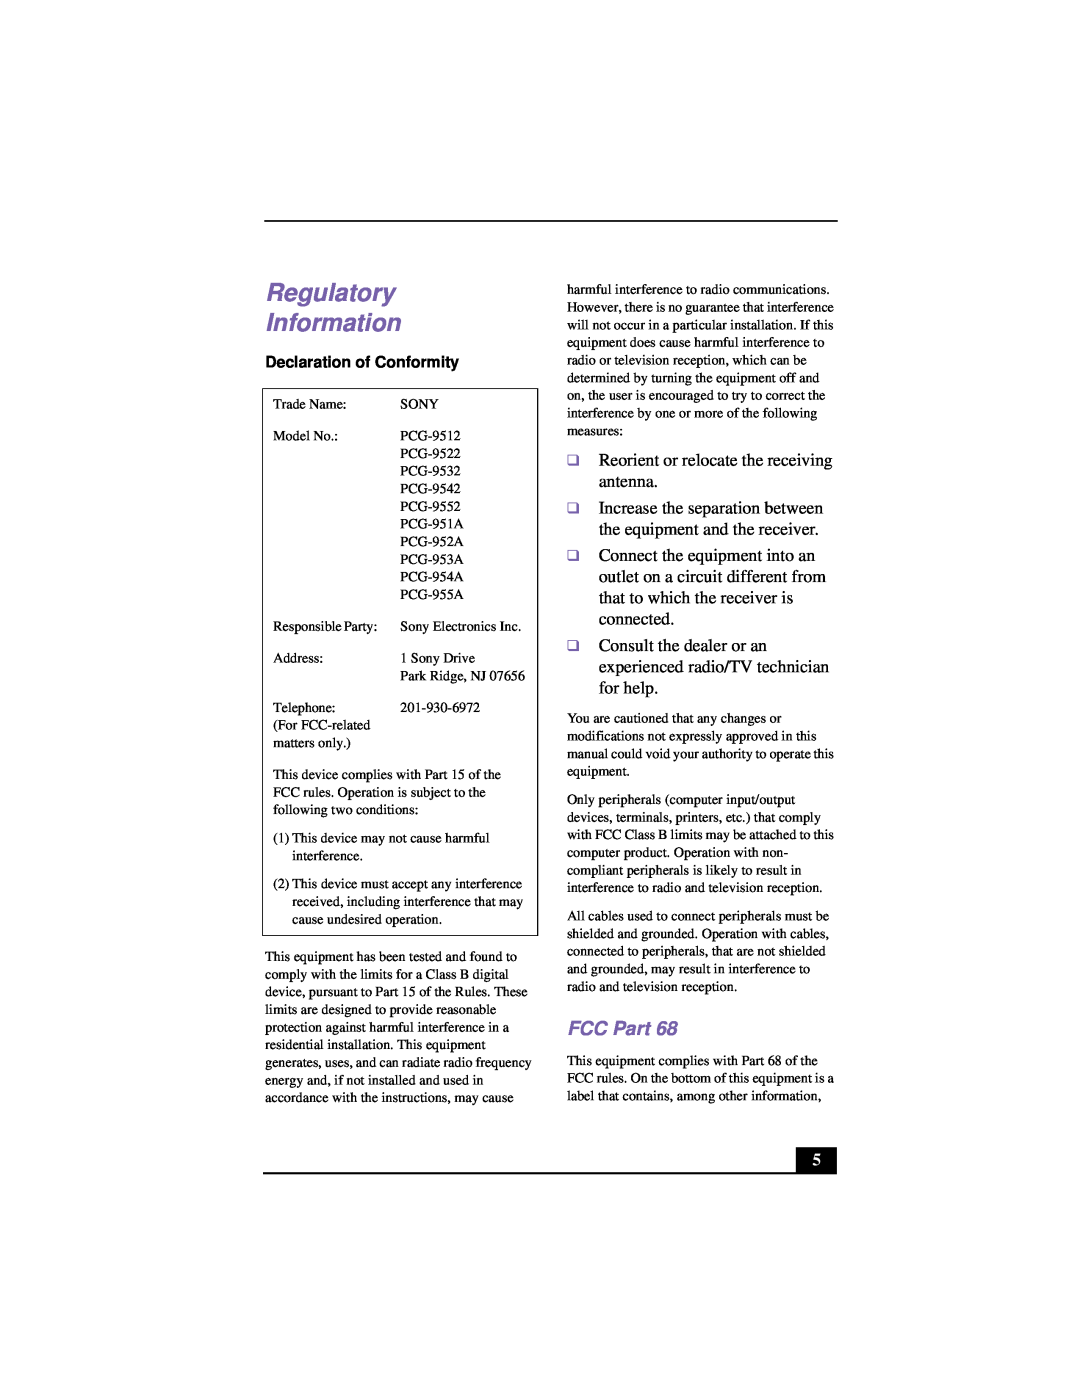 Sony PCG-FX120 manual Regulatory Information, FCC Part 